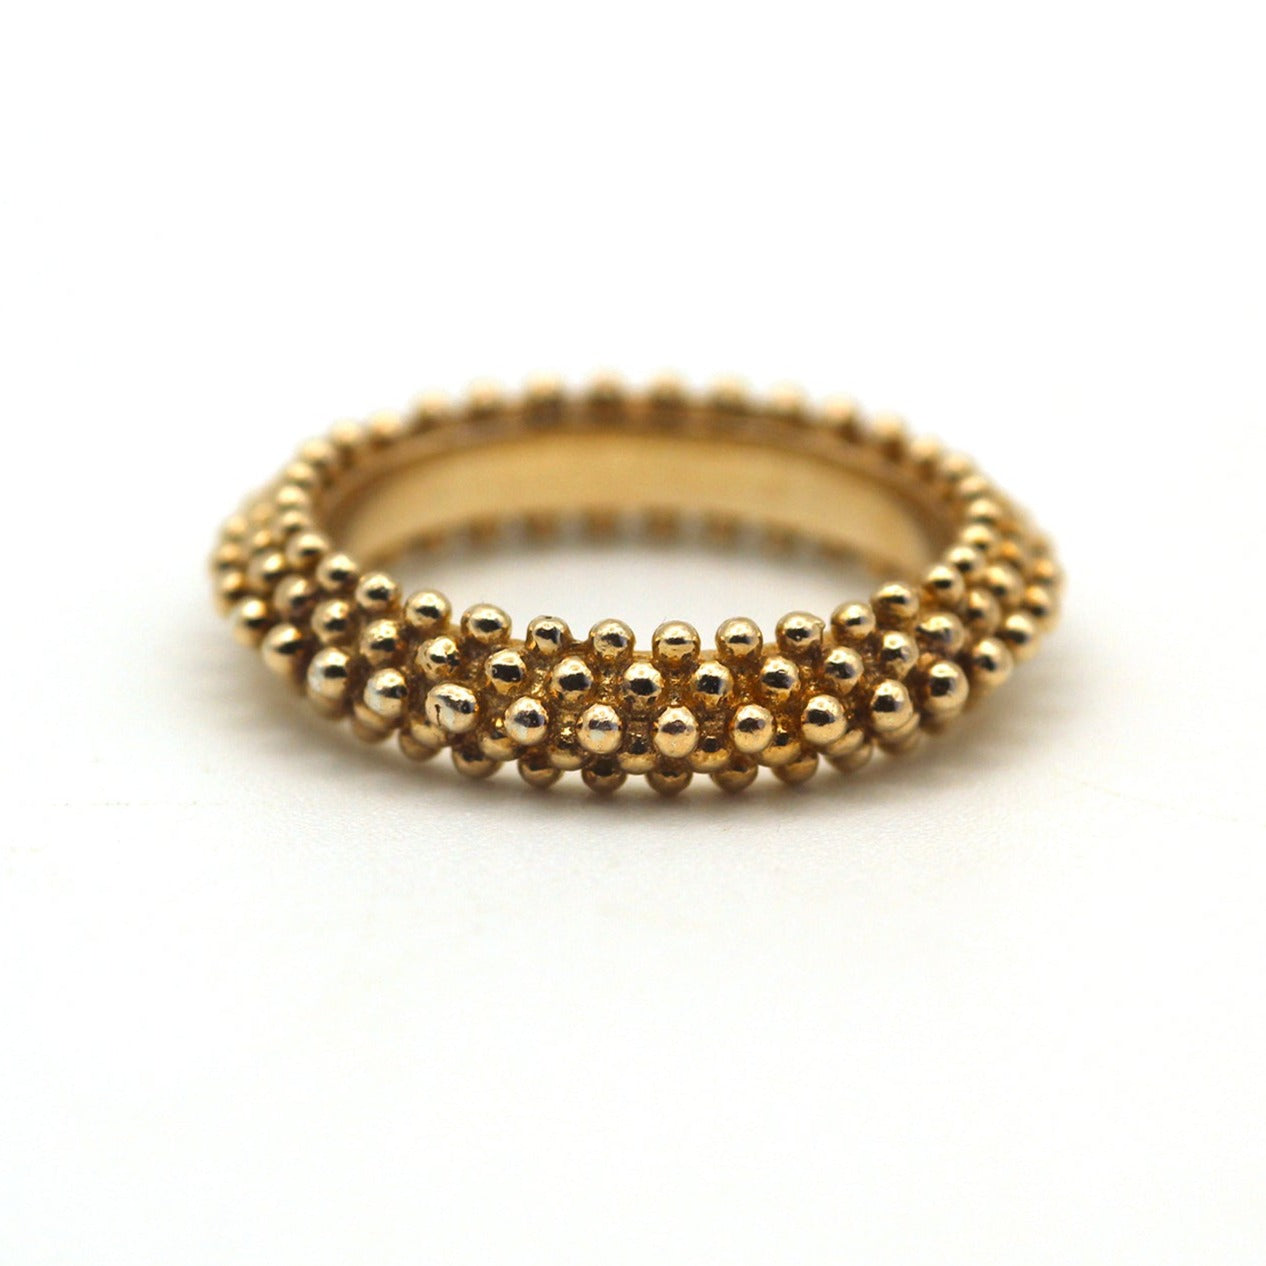 Oder from Dhaarna Mehta Handmade 14k Gold Ball Texture Ring